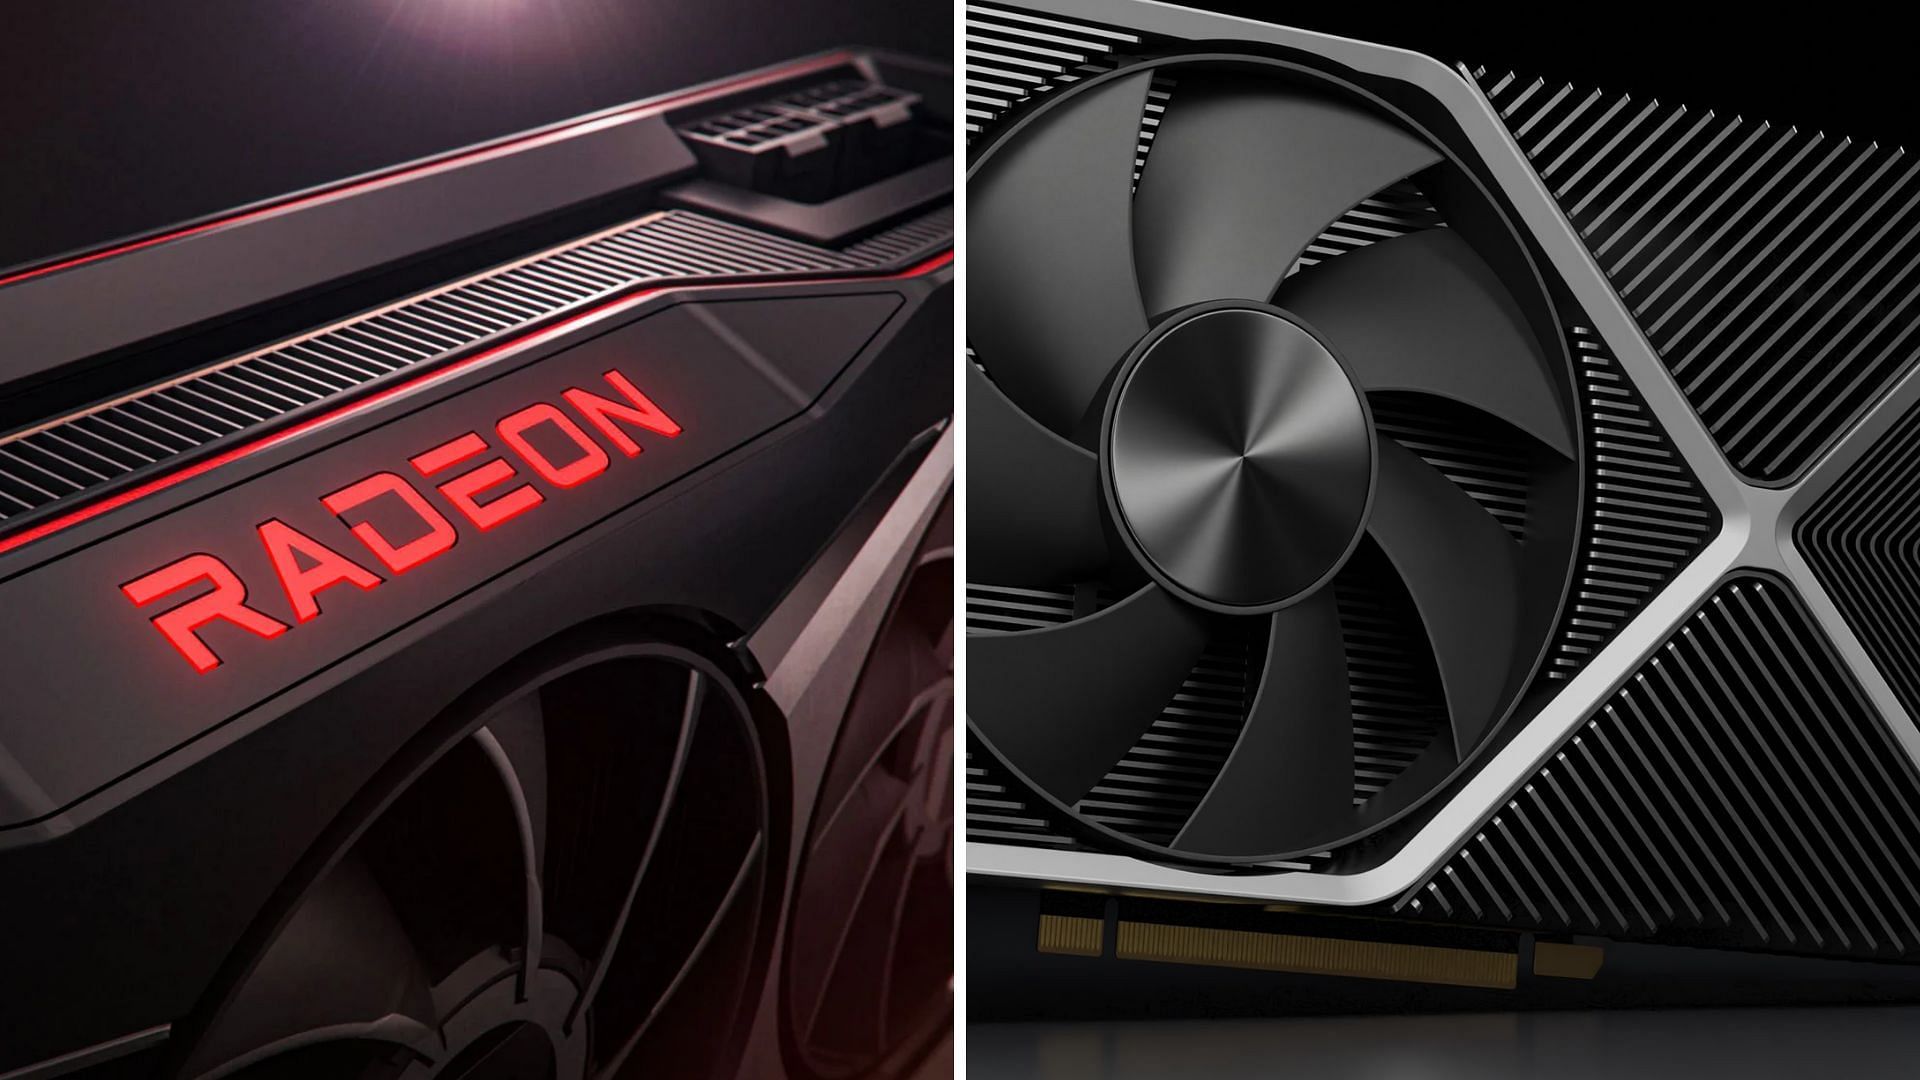 The Radeon logo and a rumored RTX 40 series FE GPU design (Image via Sportskeeda)